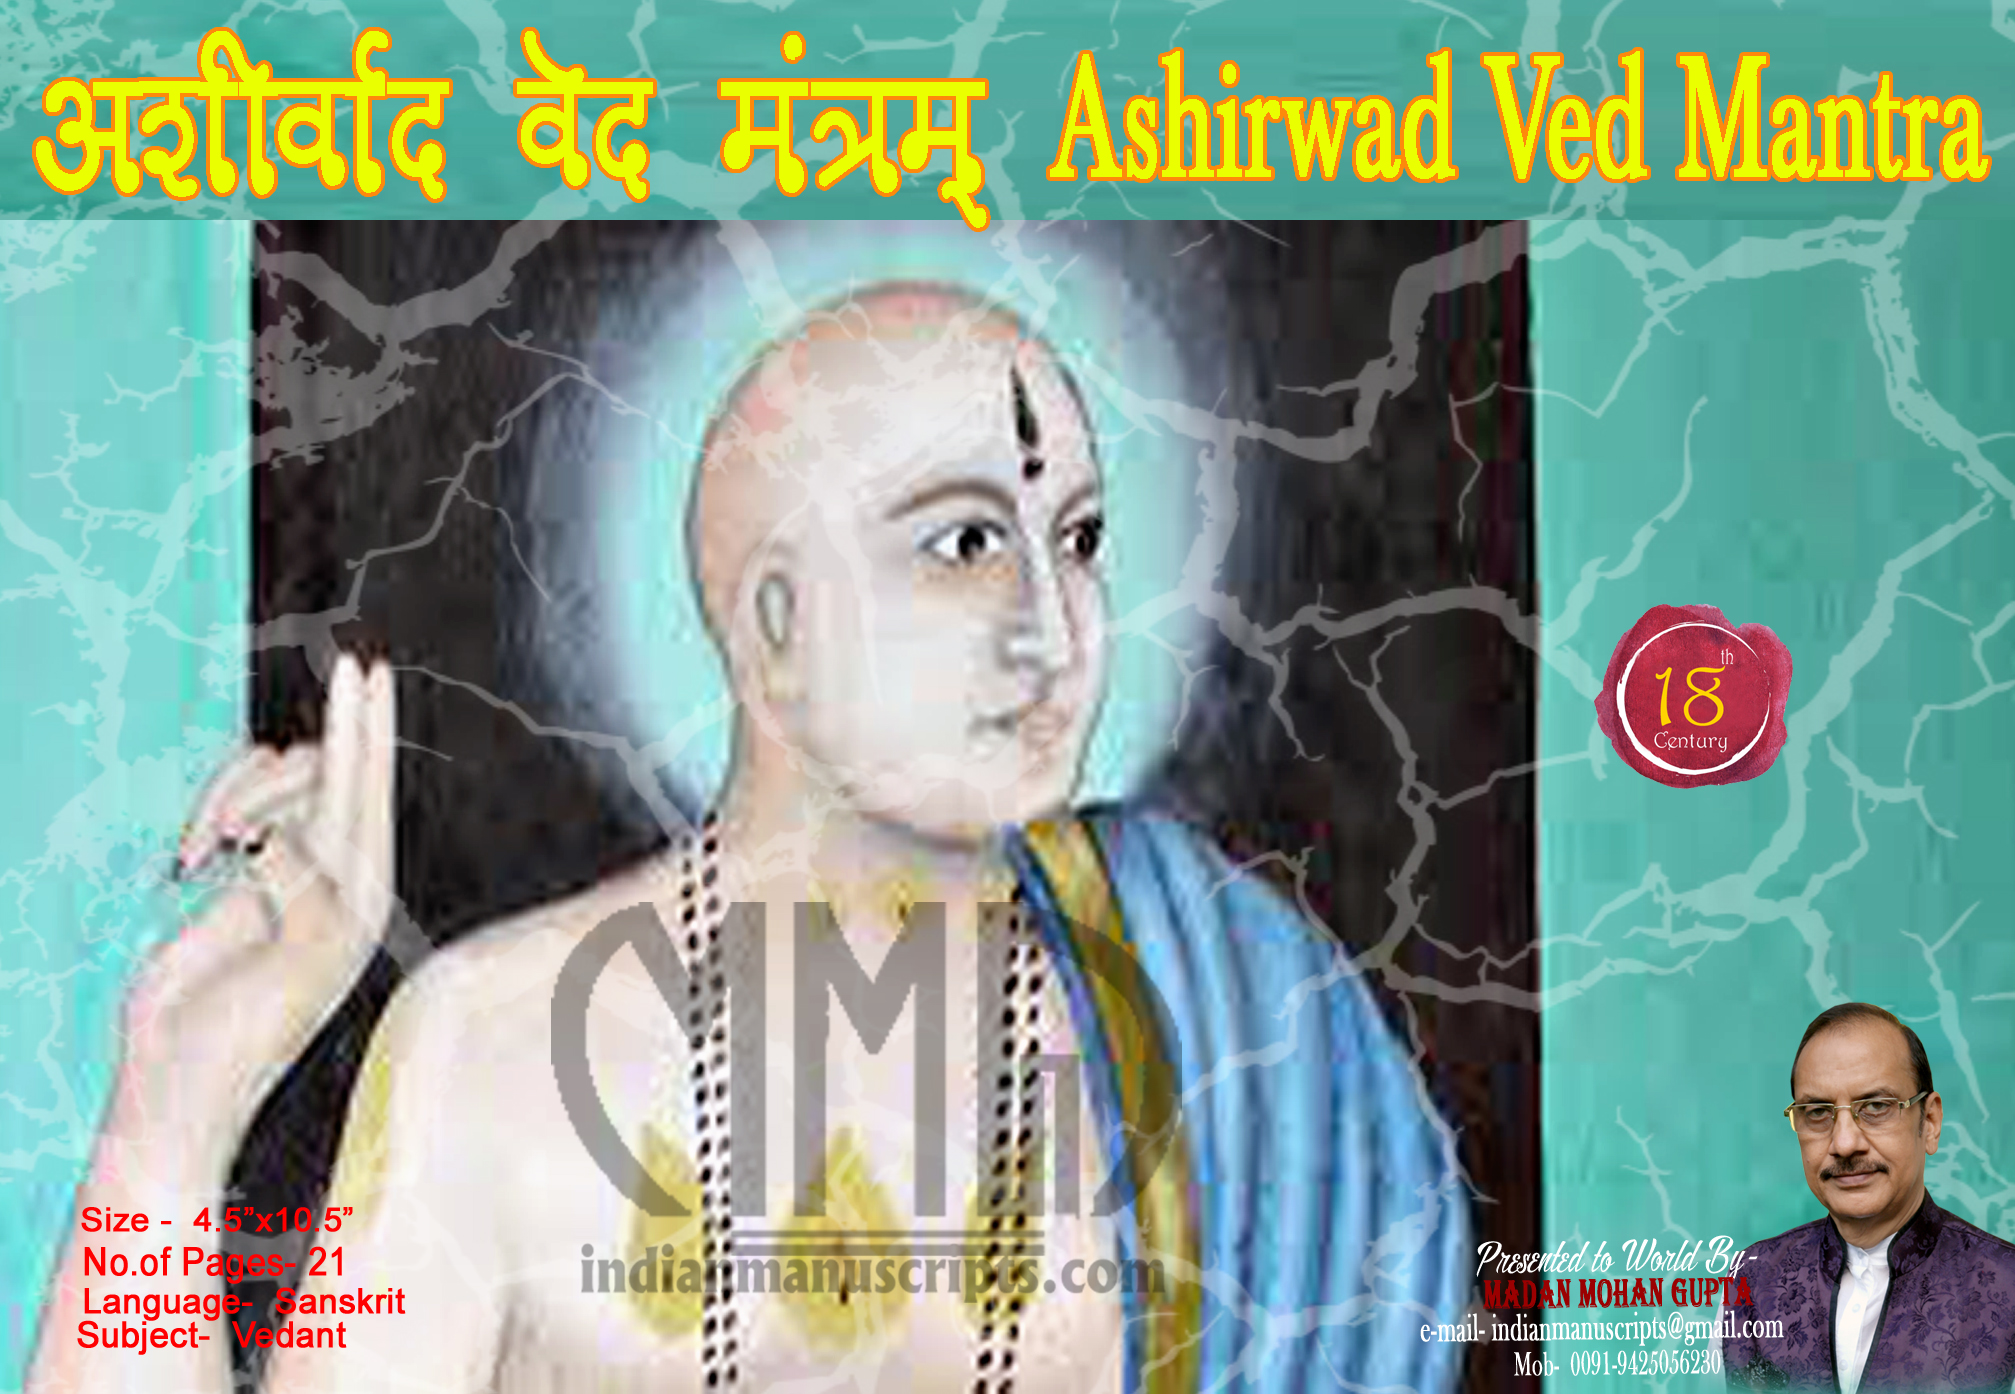 Ashirwad Ved Mantra